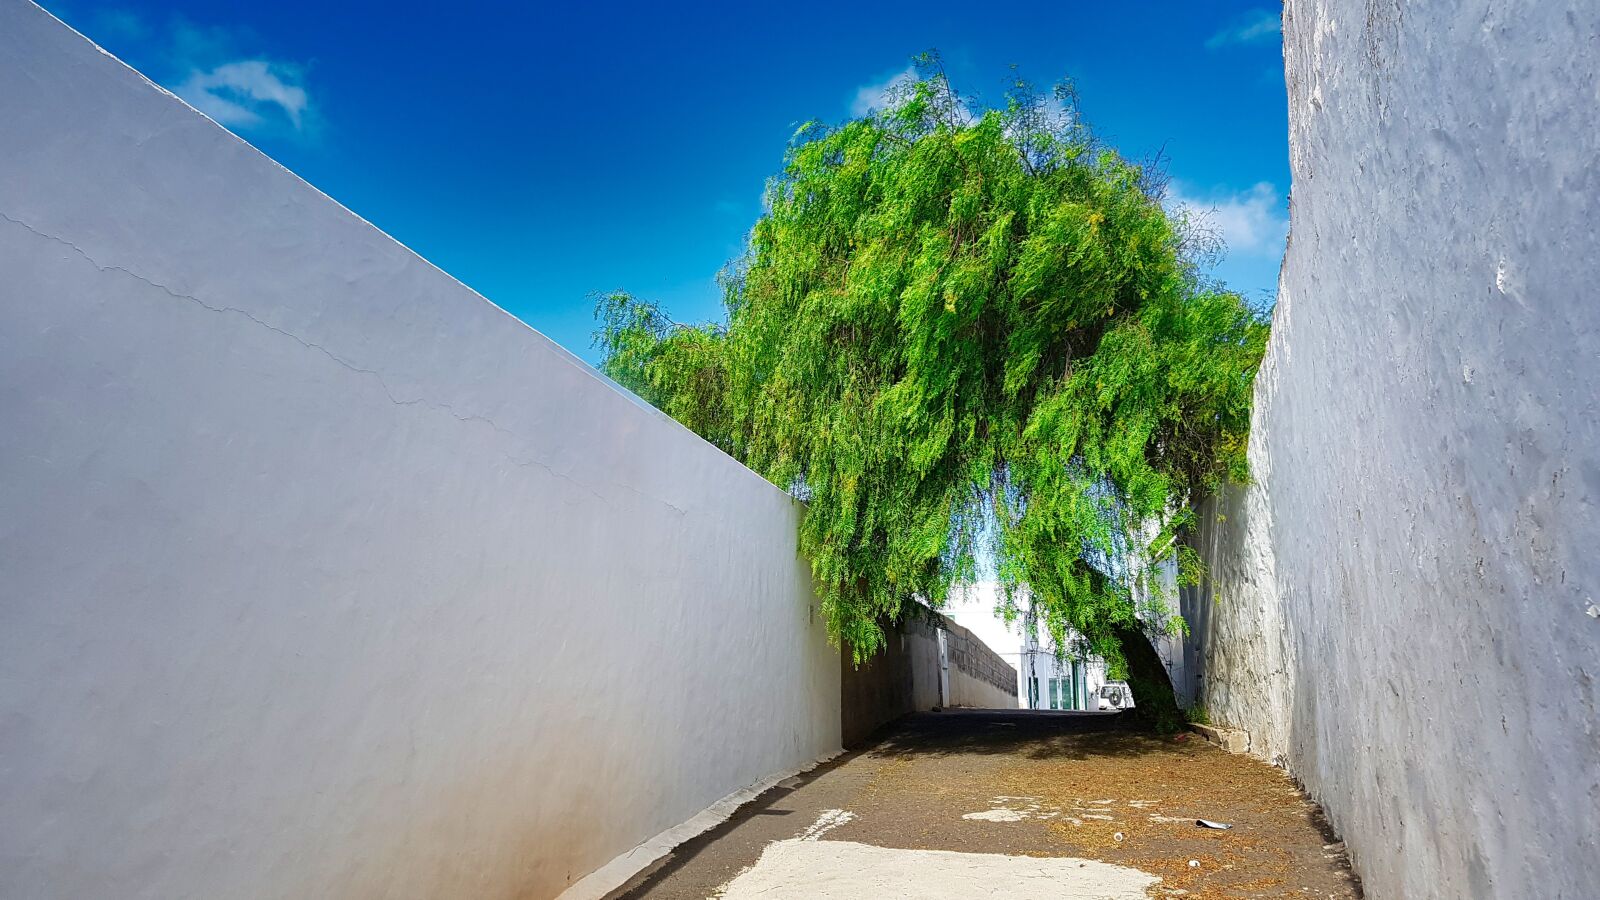 Samsung Galaxy S7 sample photo. Lanzarote, tree, street photography